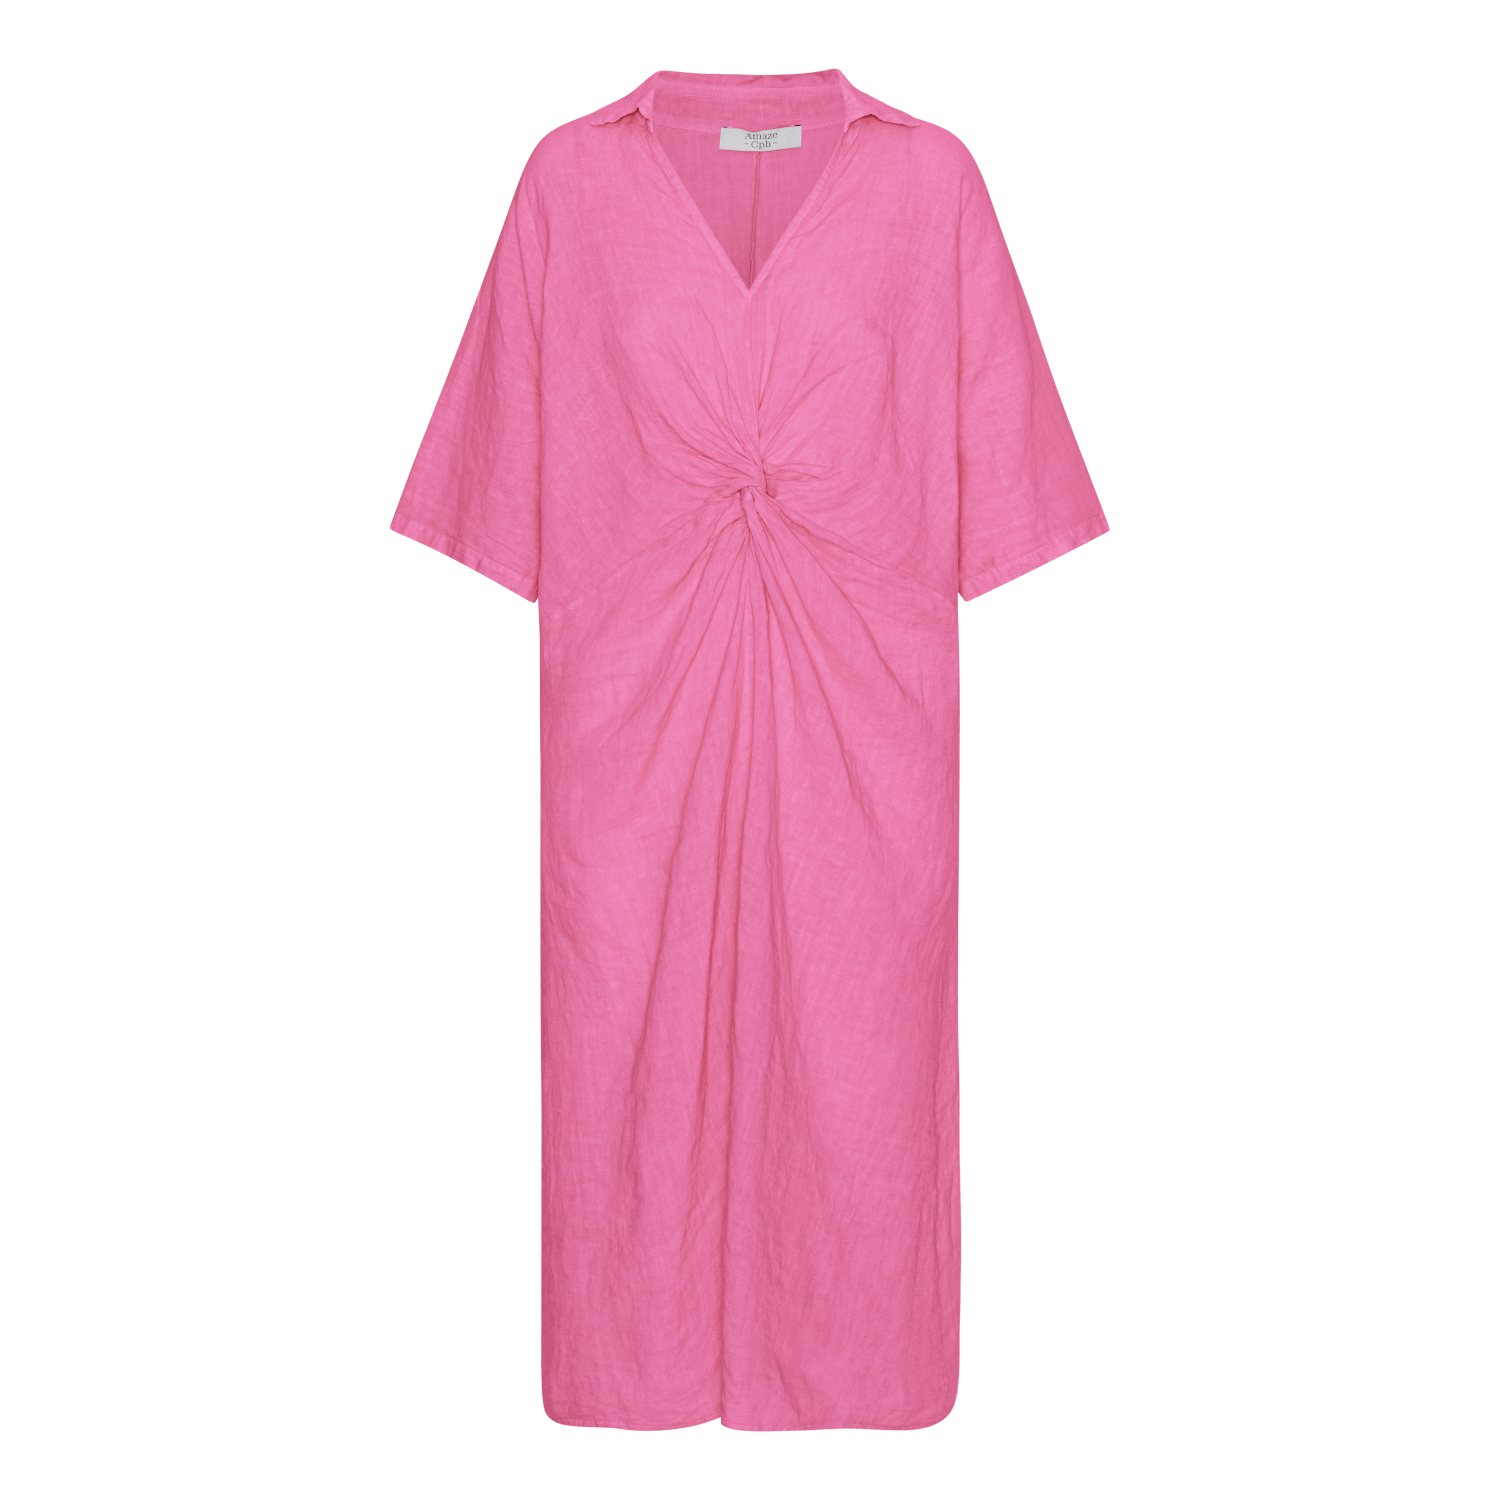 Linen Twist Dress - Pink - Amaze Cph - Pink - S/M